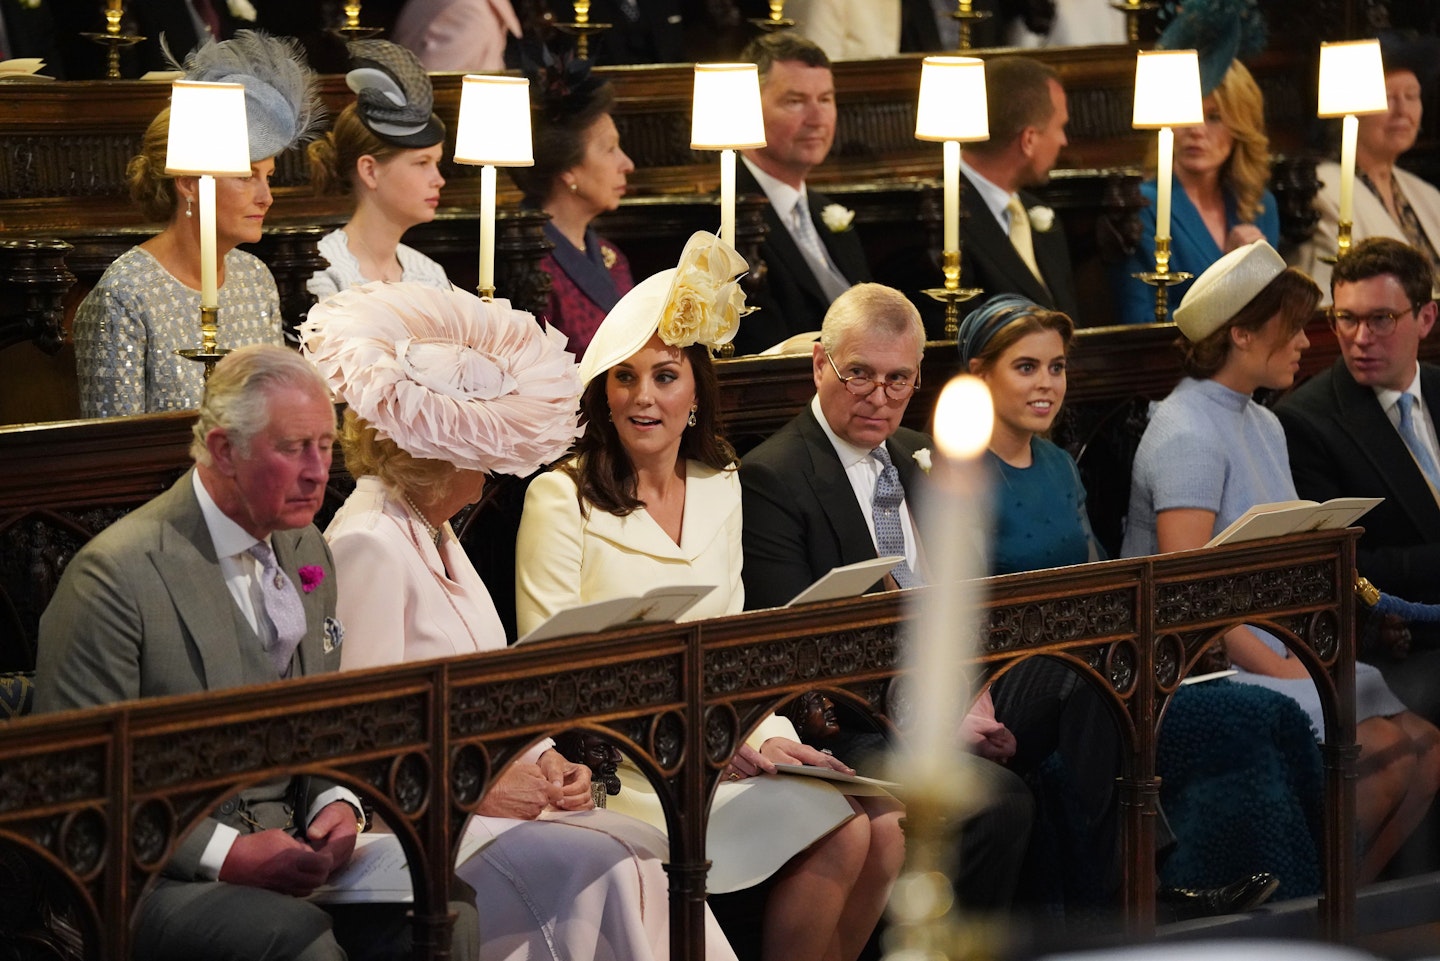 Prince Harry and Meghan Markle's wedding